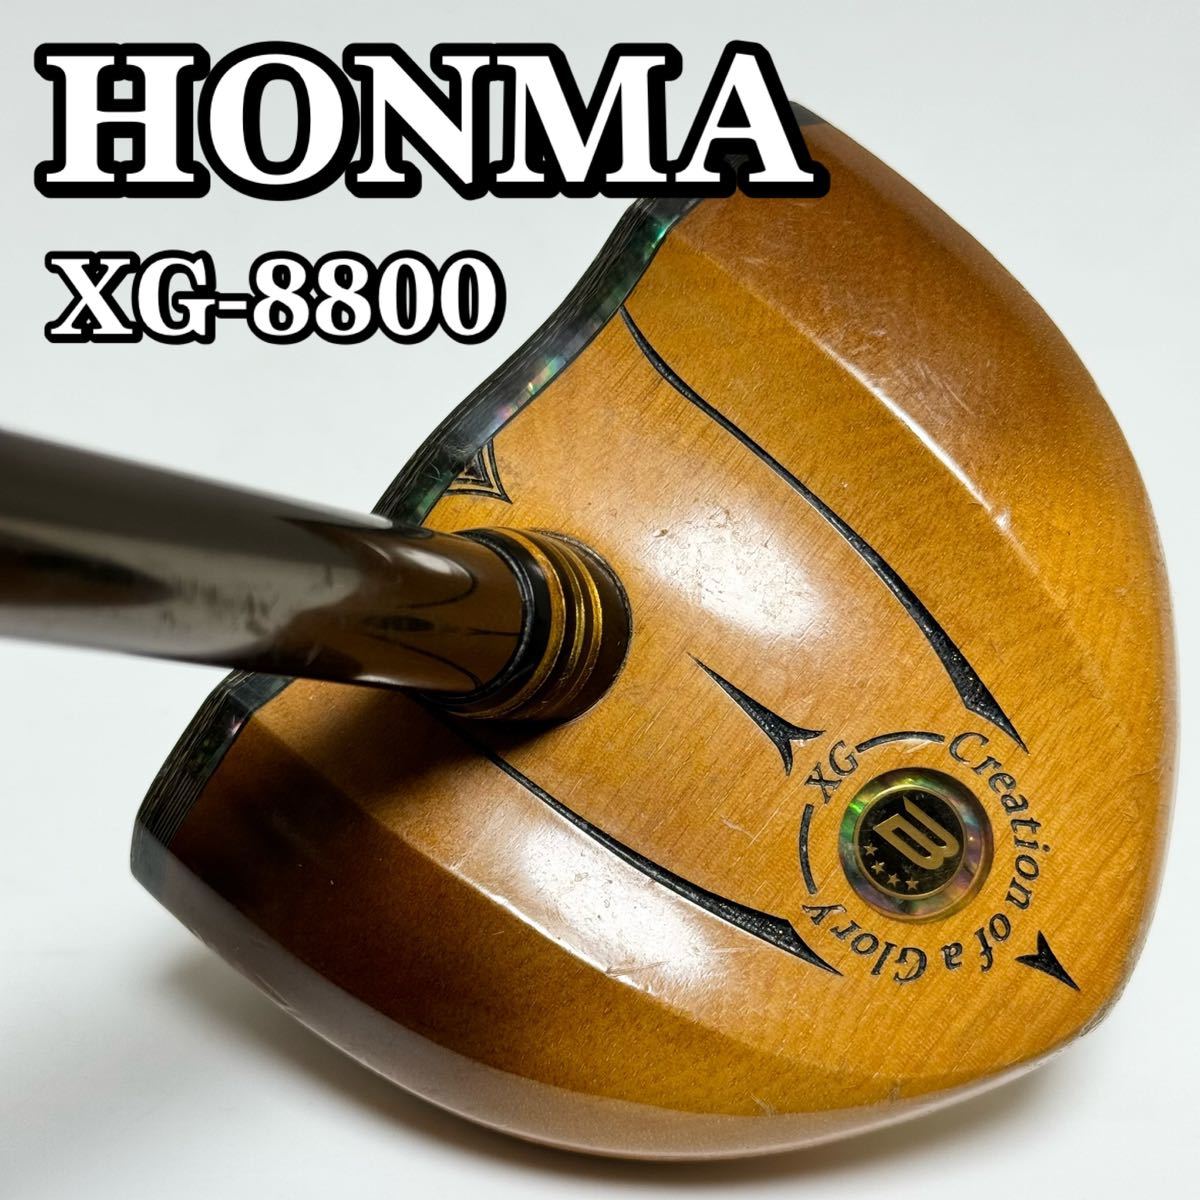 HONMA ホンマゴルフ パークゴルフクラブ XG-8800 ARMQR HighMoi BERES 4星 高級クラブ 右打ち用 右利き用 約85cm IPGA認定品 本間ゴルフ_画像1